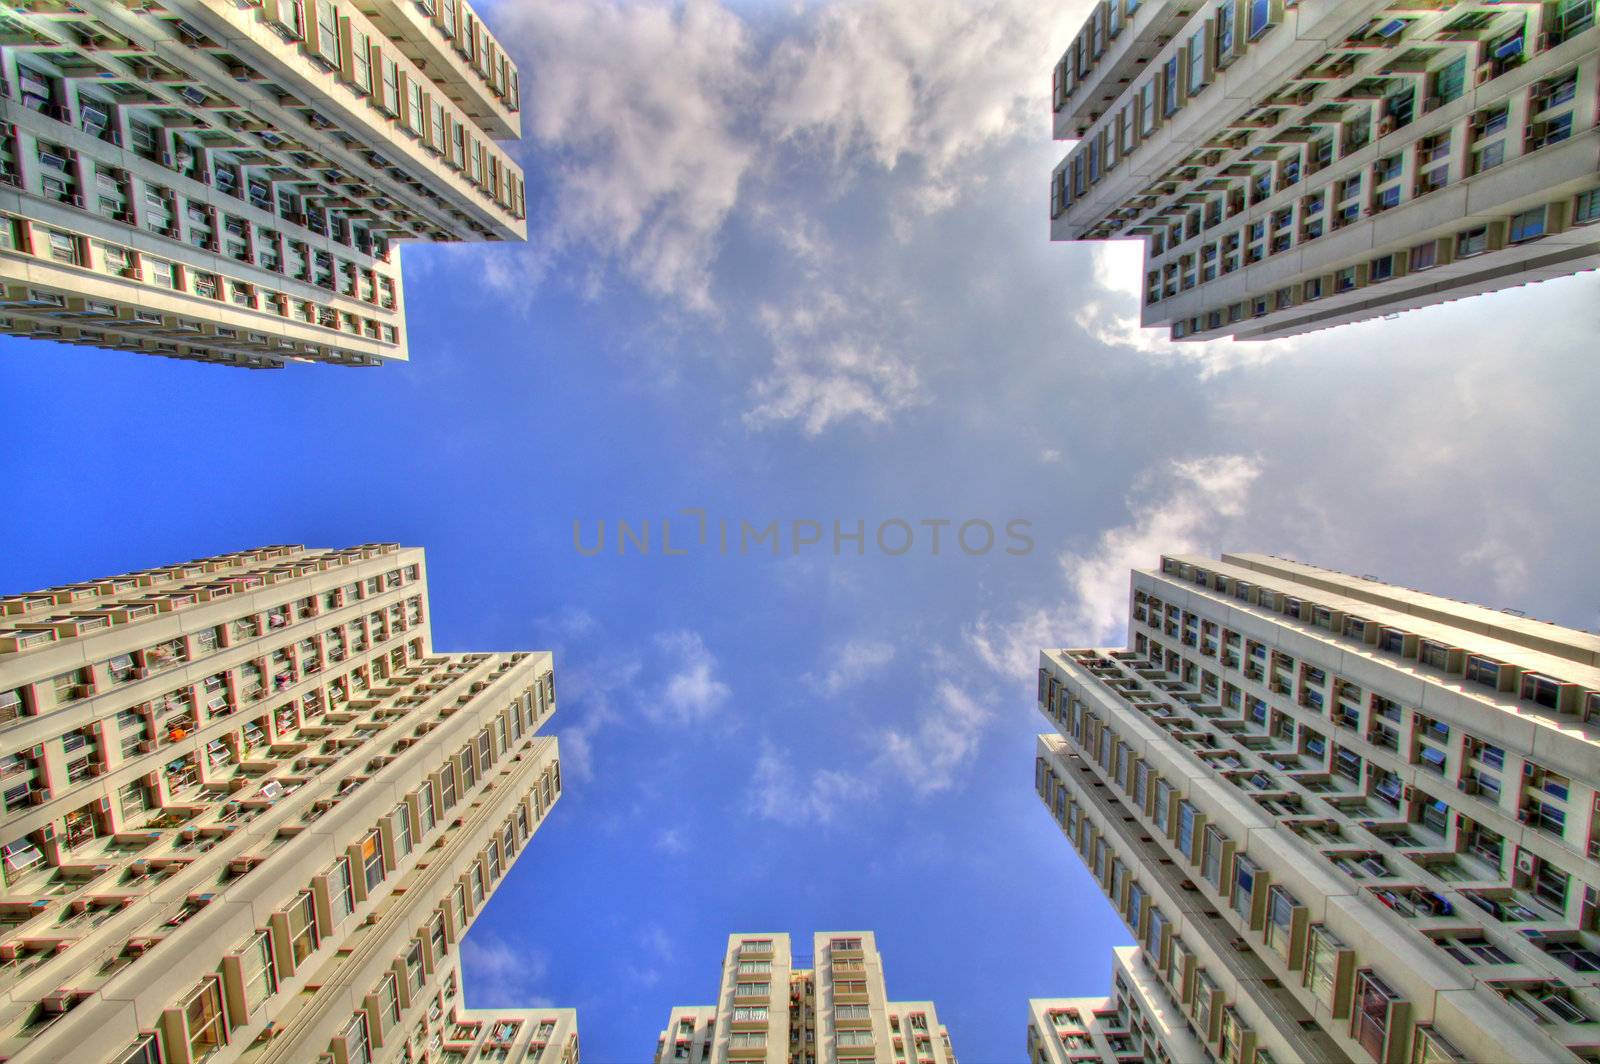 Hong Kong public housing in HDR by kawing921